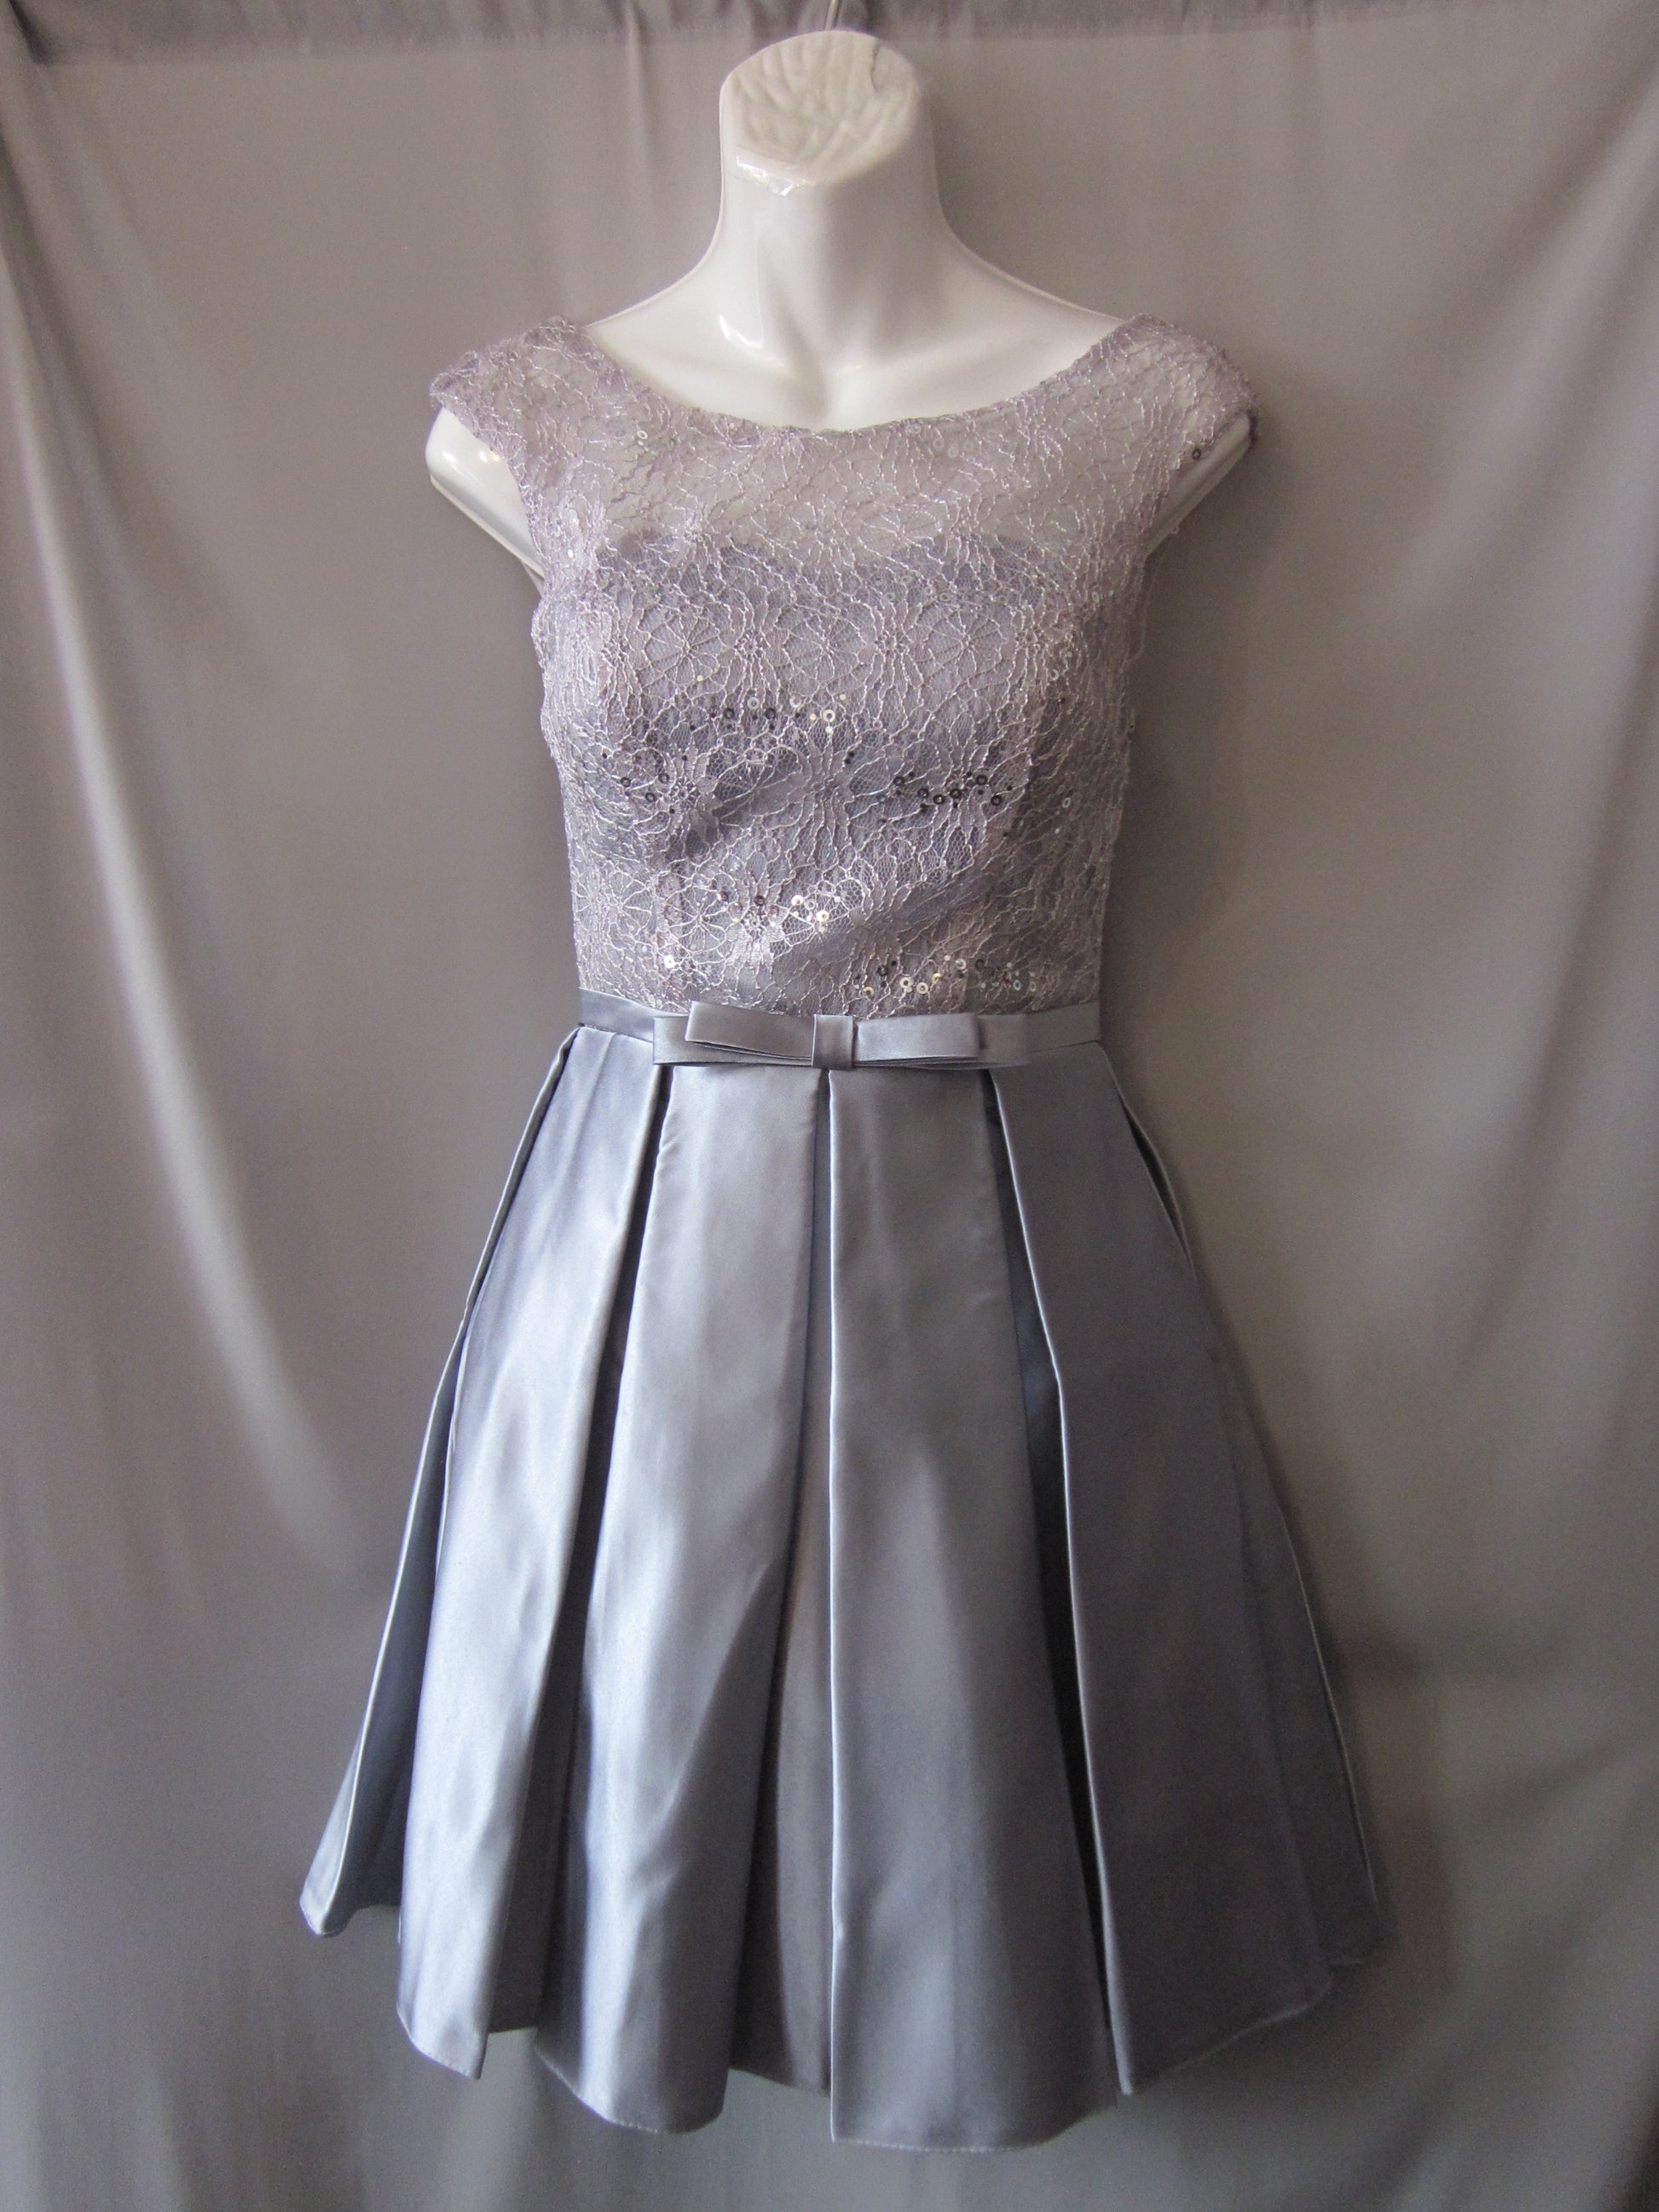 Short Prom/Grad Dress Size M Style 4225 - MISS LESTER'S 